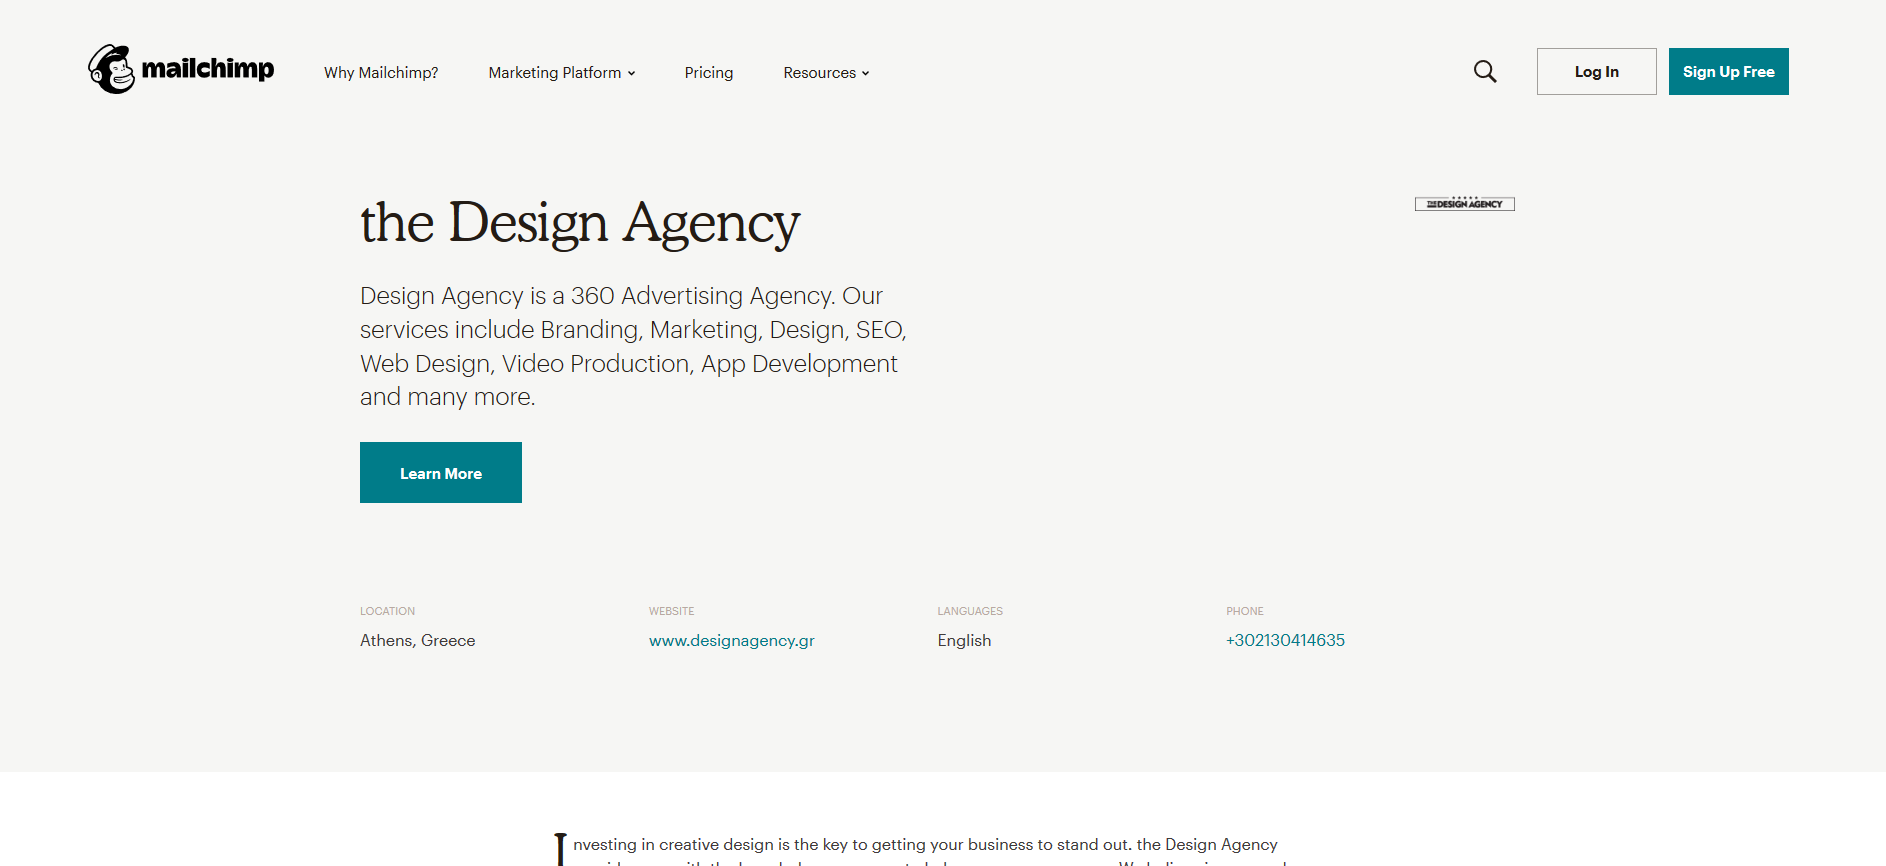 the Design Agency became an official expert on Mailchimp.com